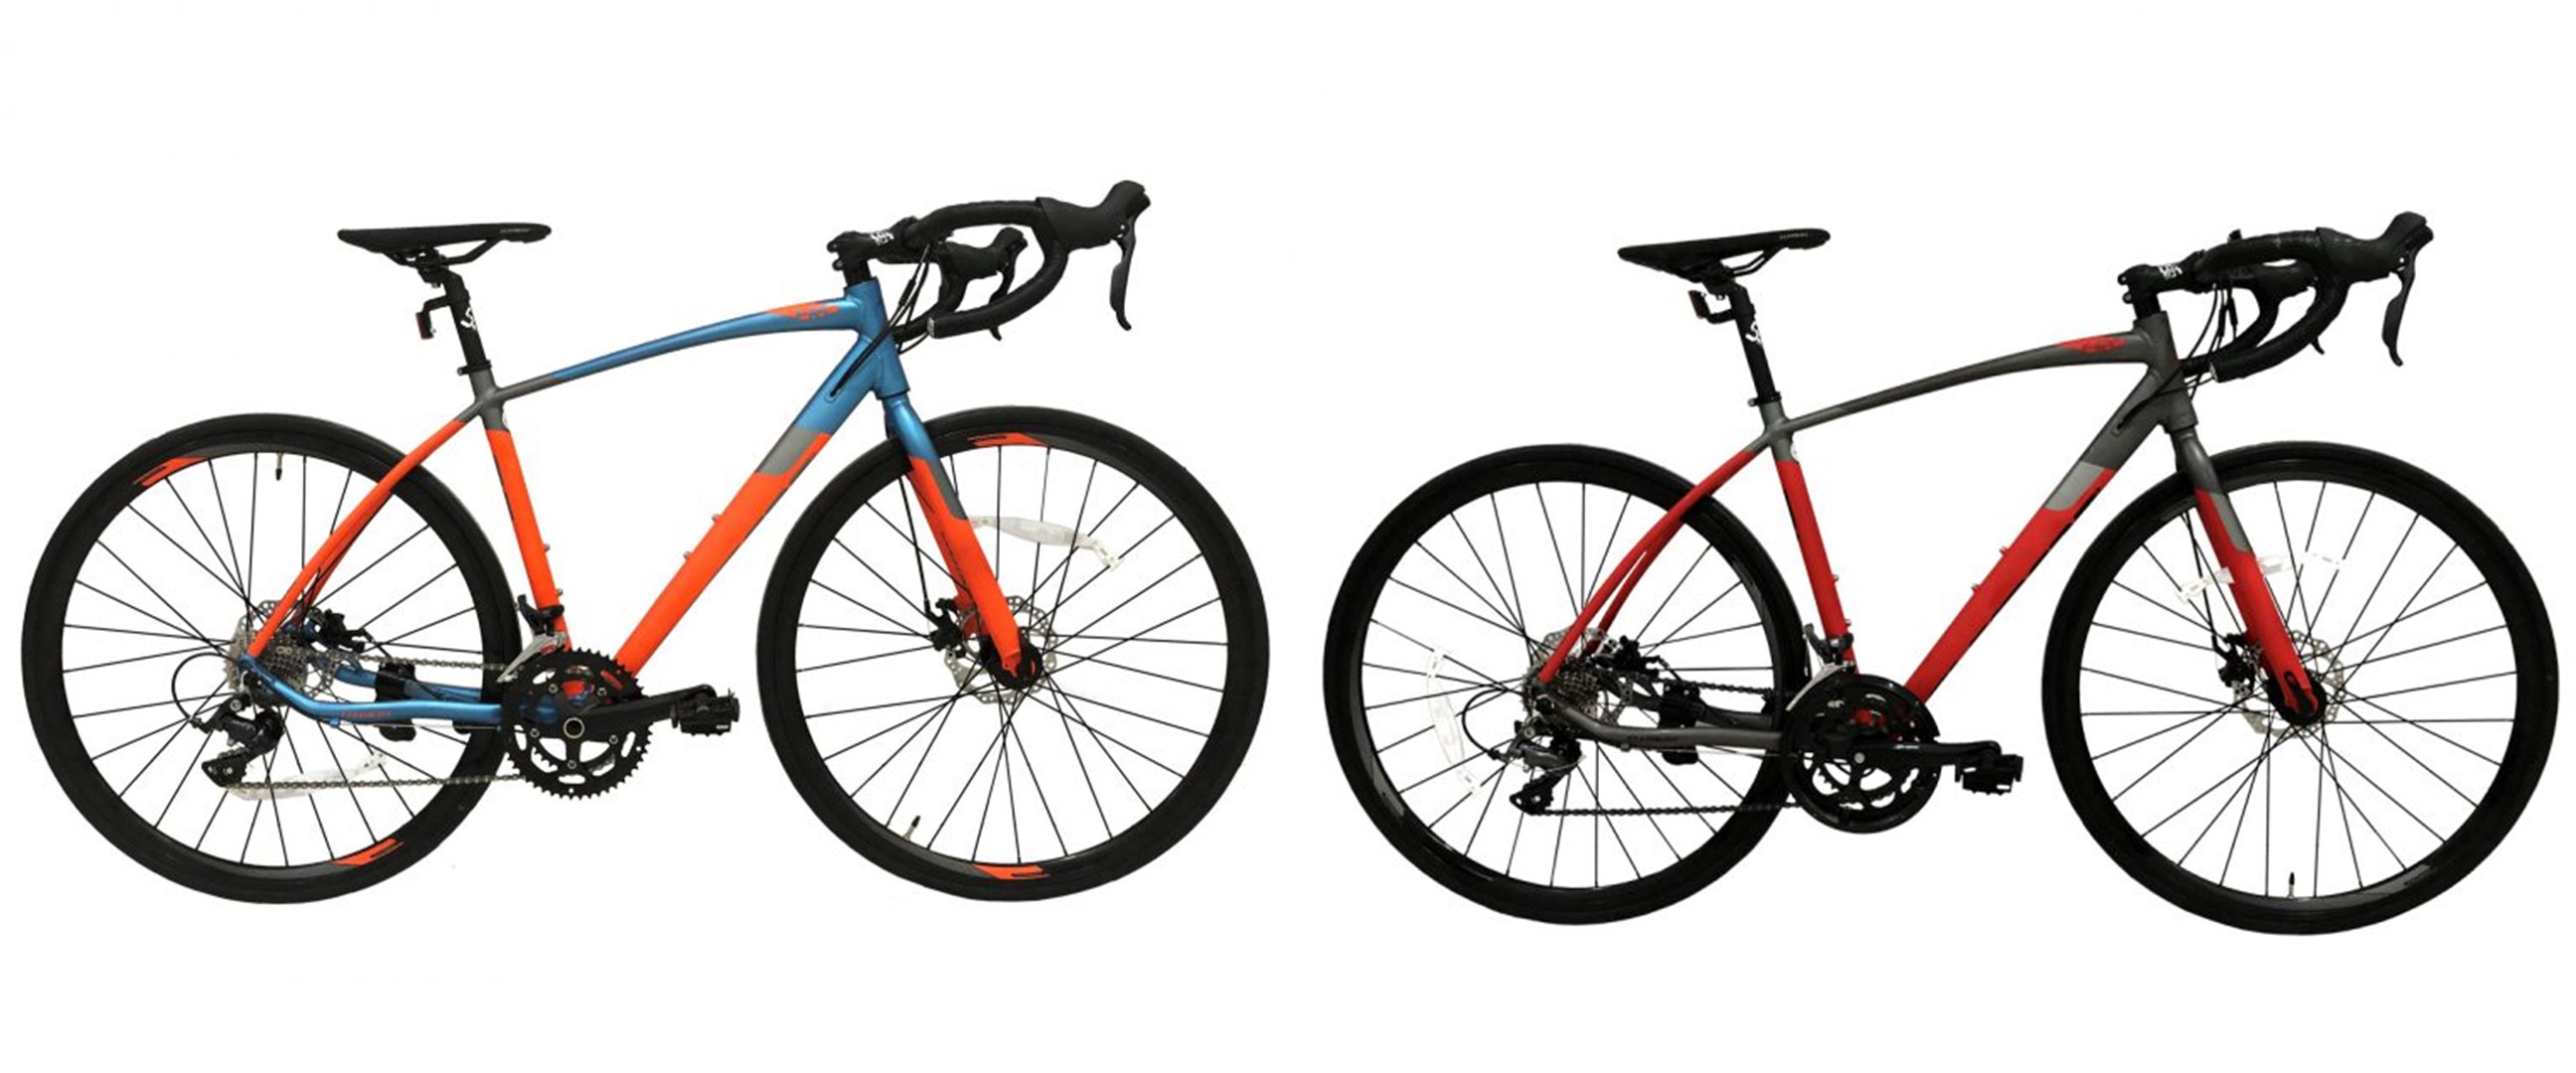 Harga sepeda balap Element dan spesifikasinya, kekinian dan modern